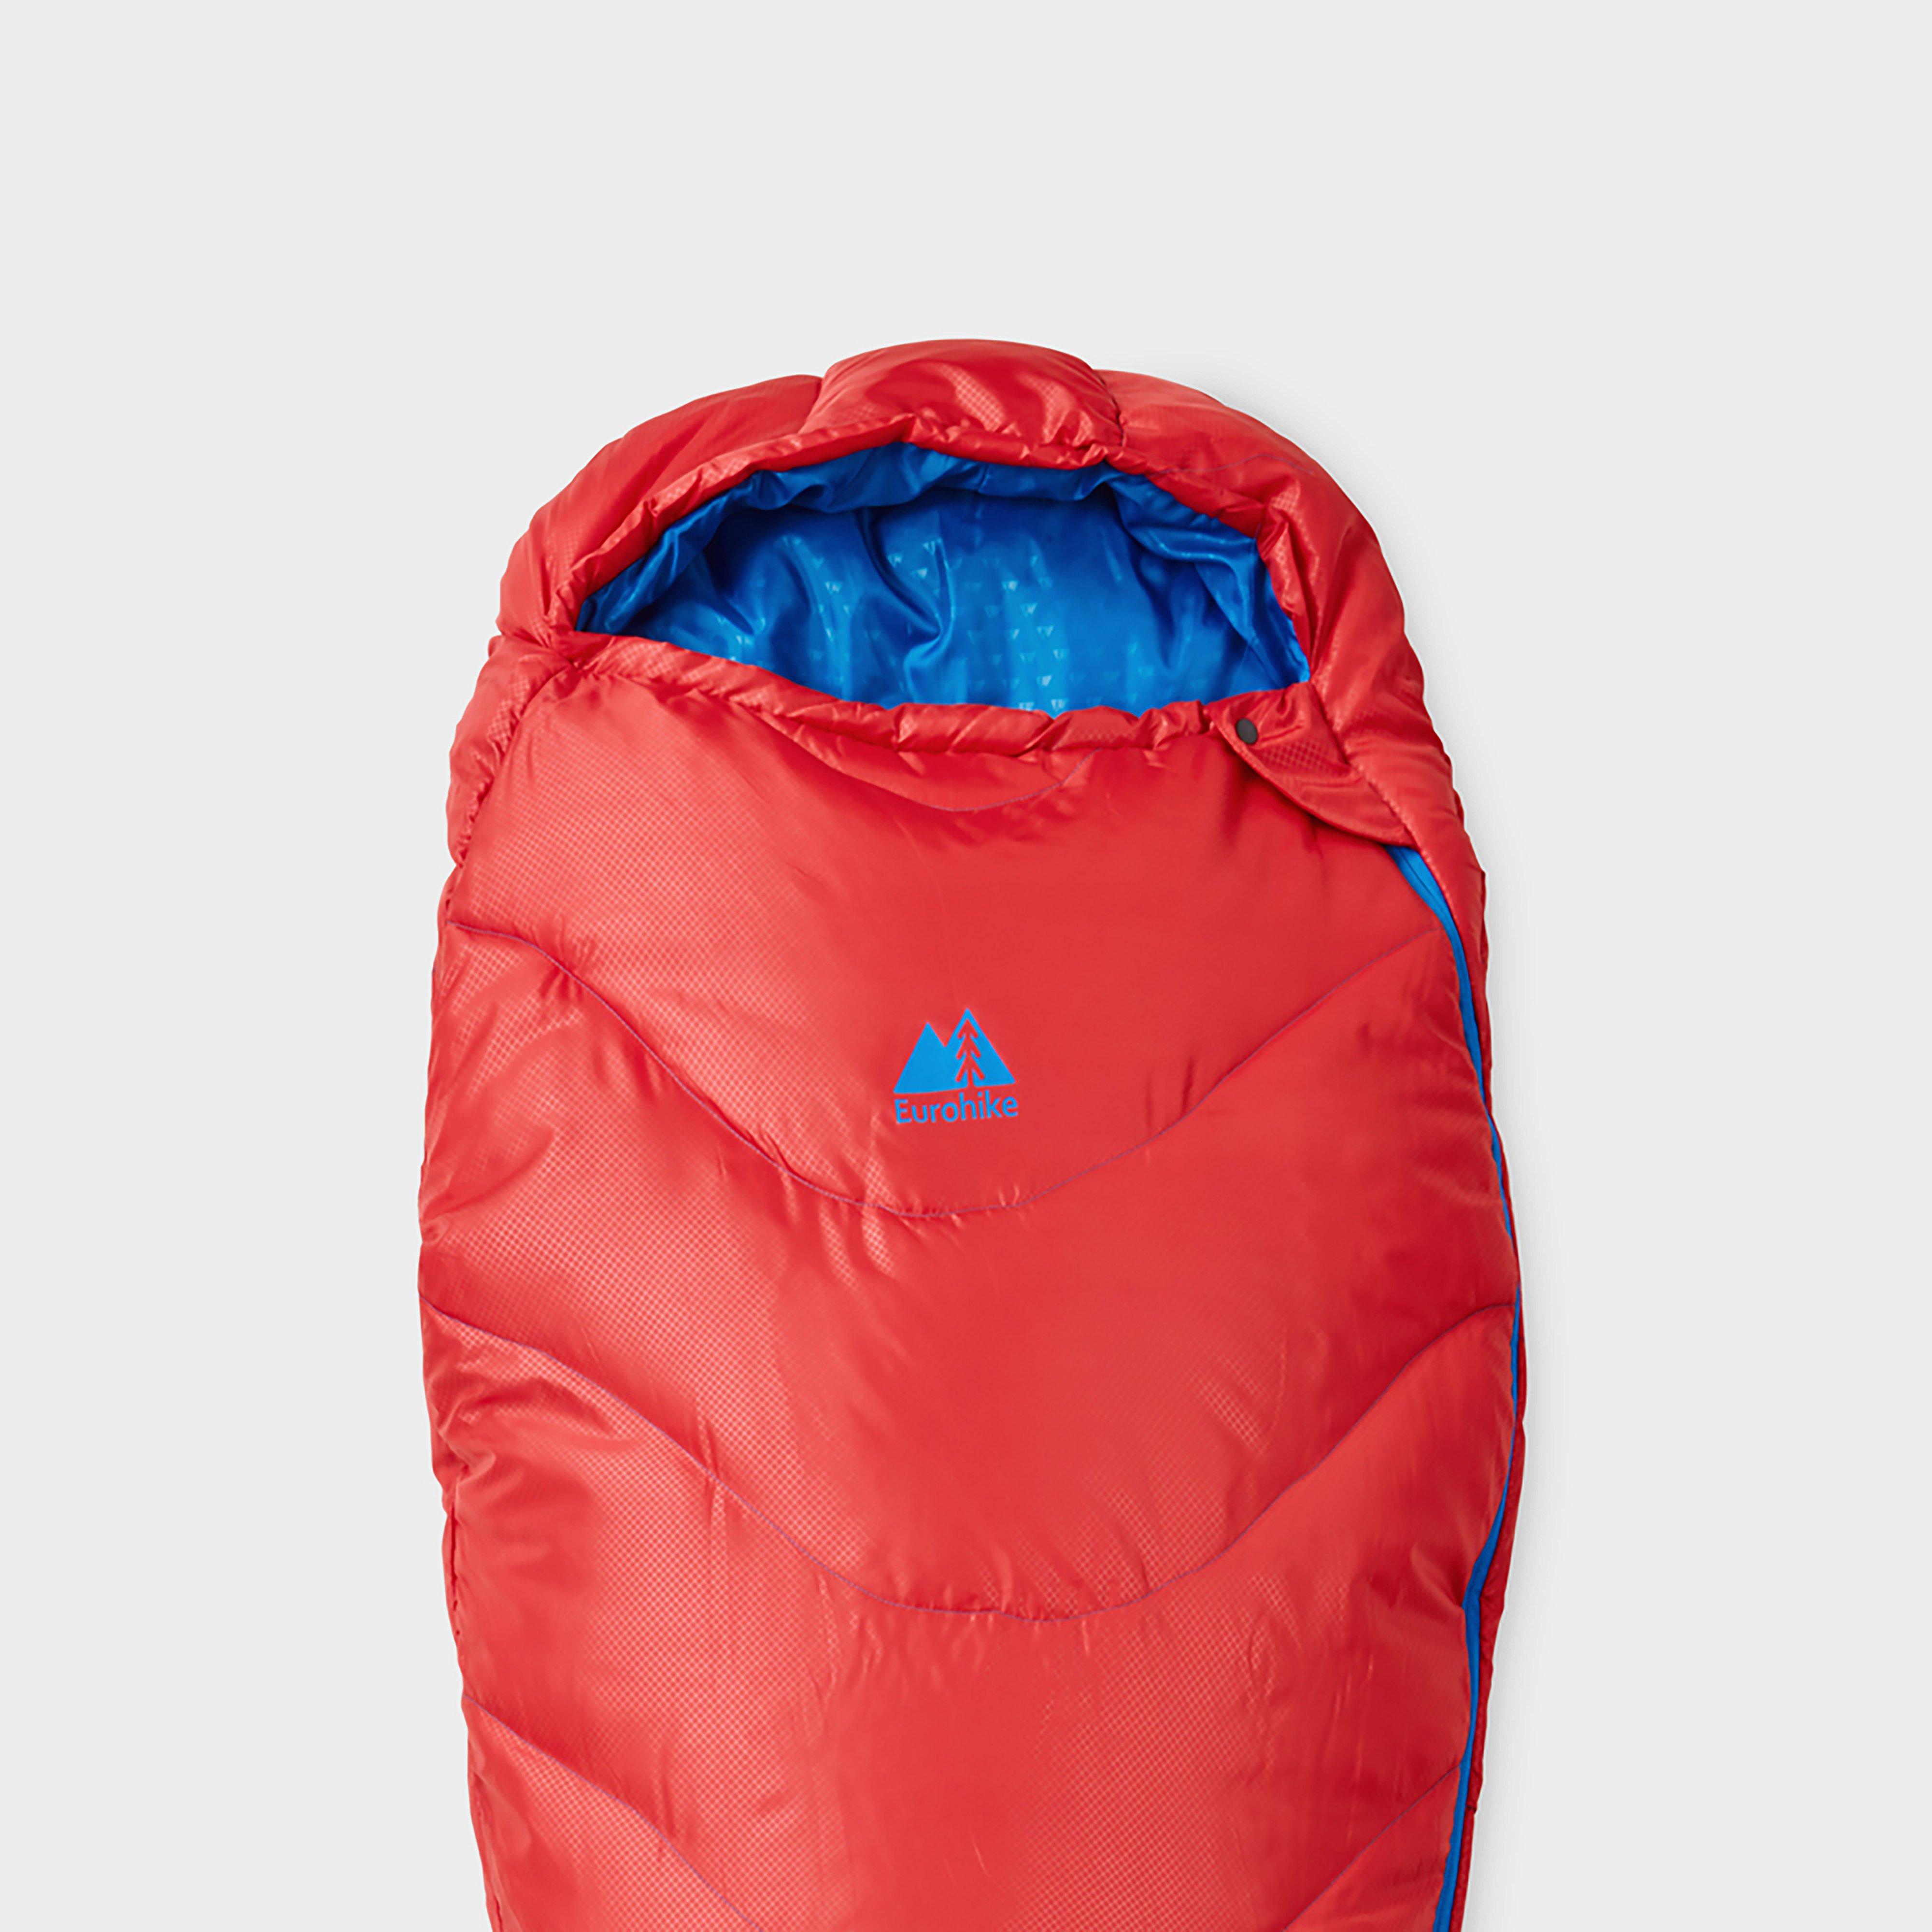 Eurohike Adventurer Youth Sleeping Bag, Red